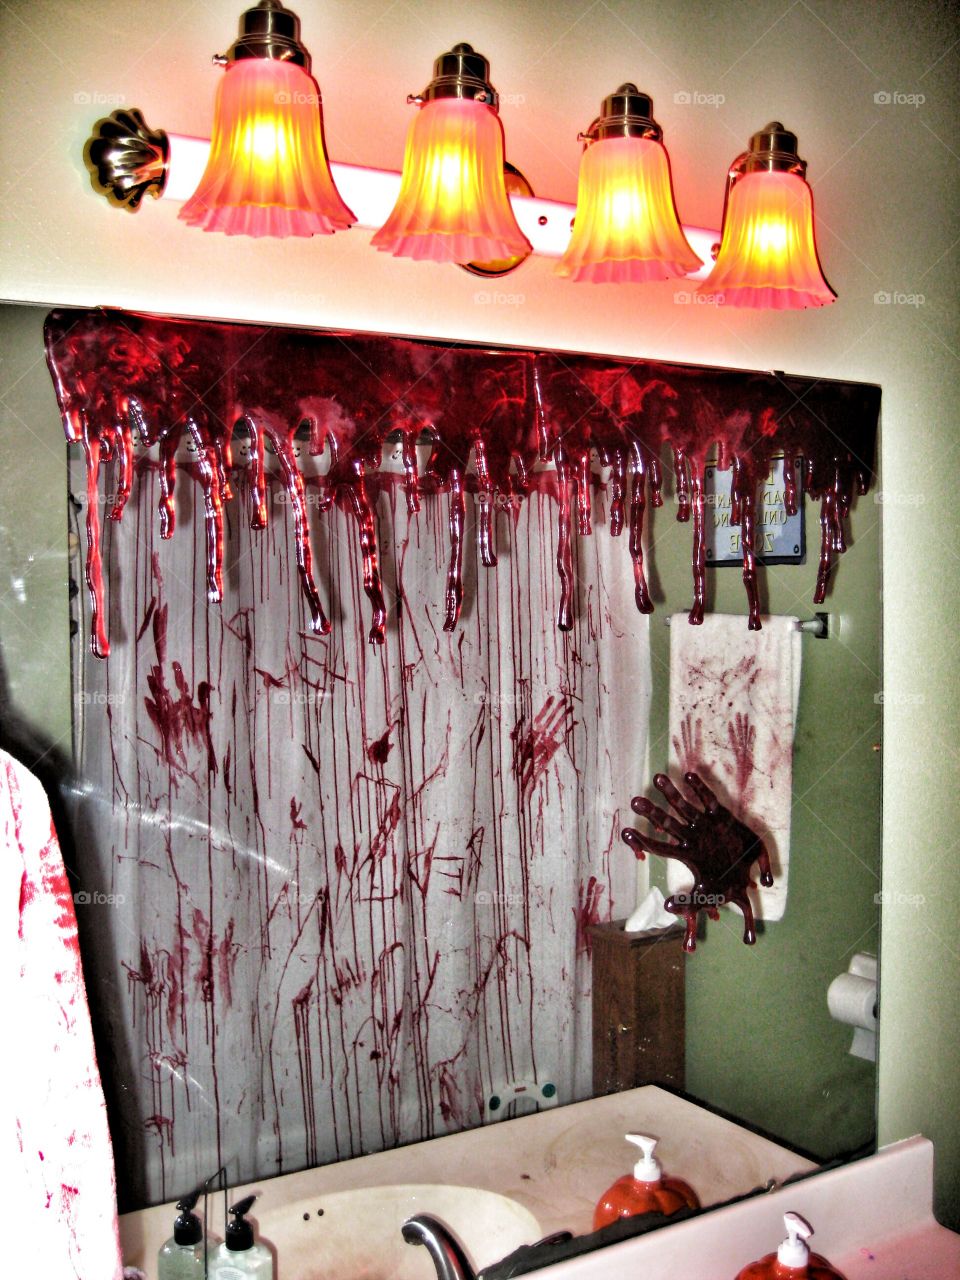 Bloody bathroom scene